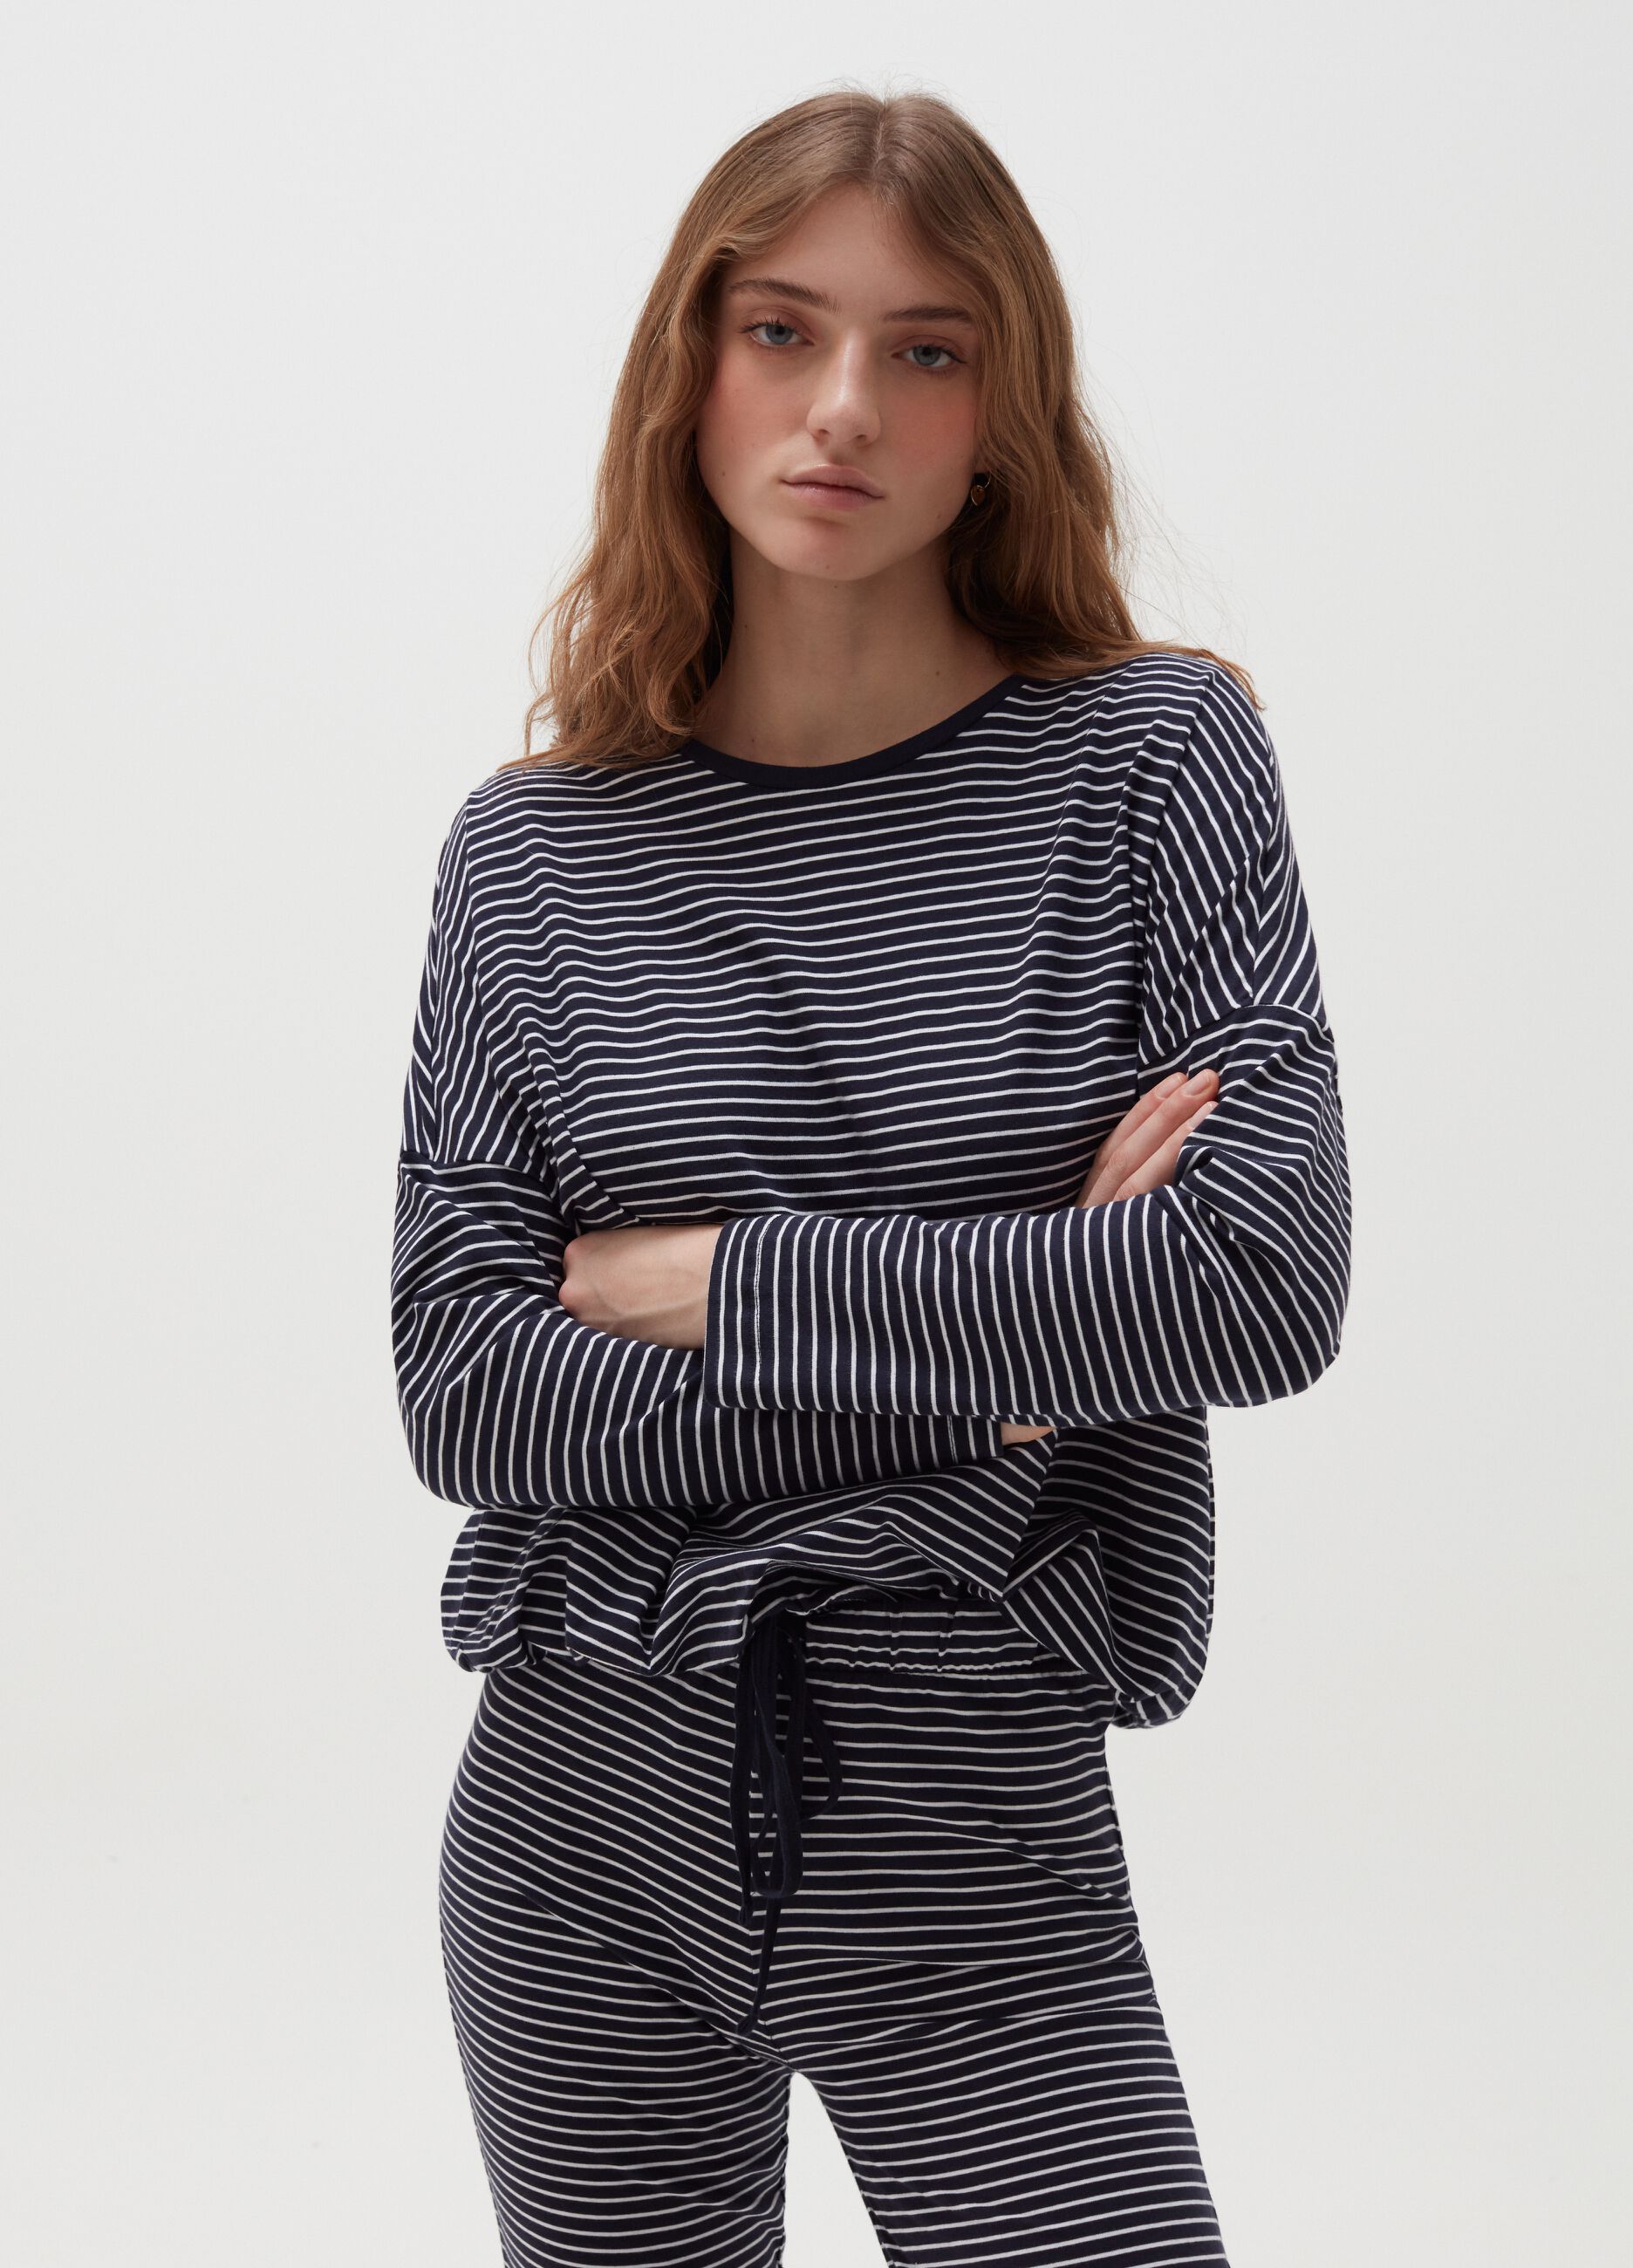 Cotton pyjama top with striped pattern